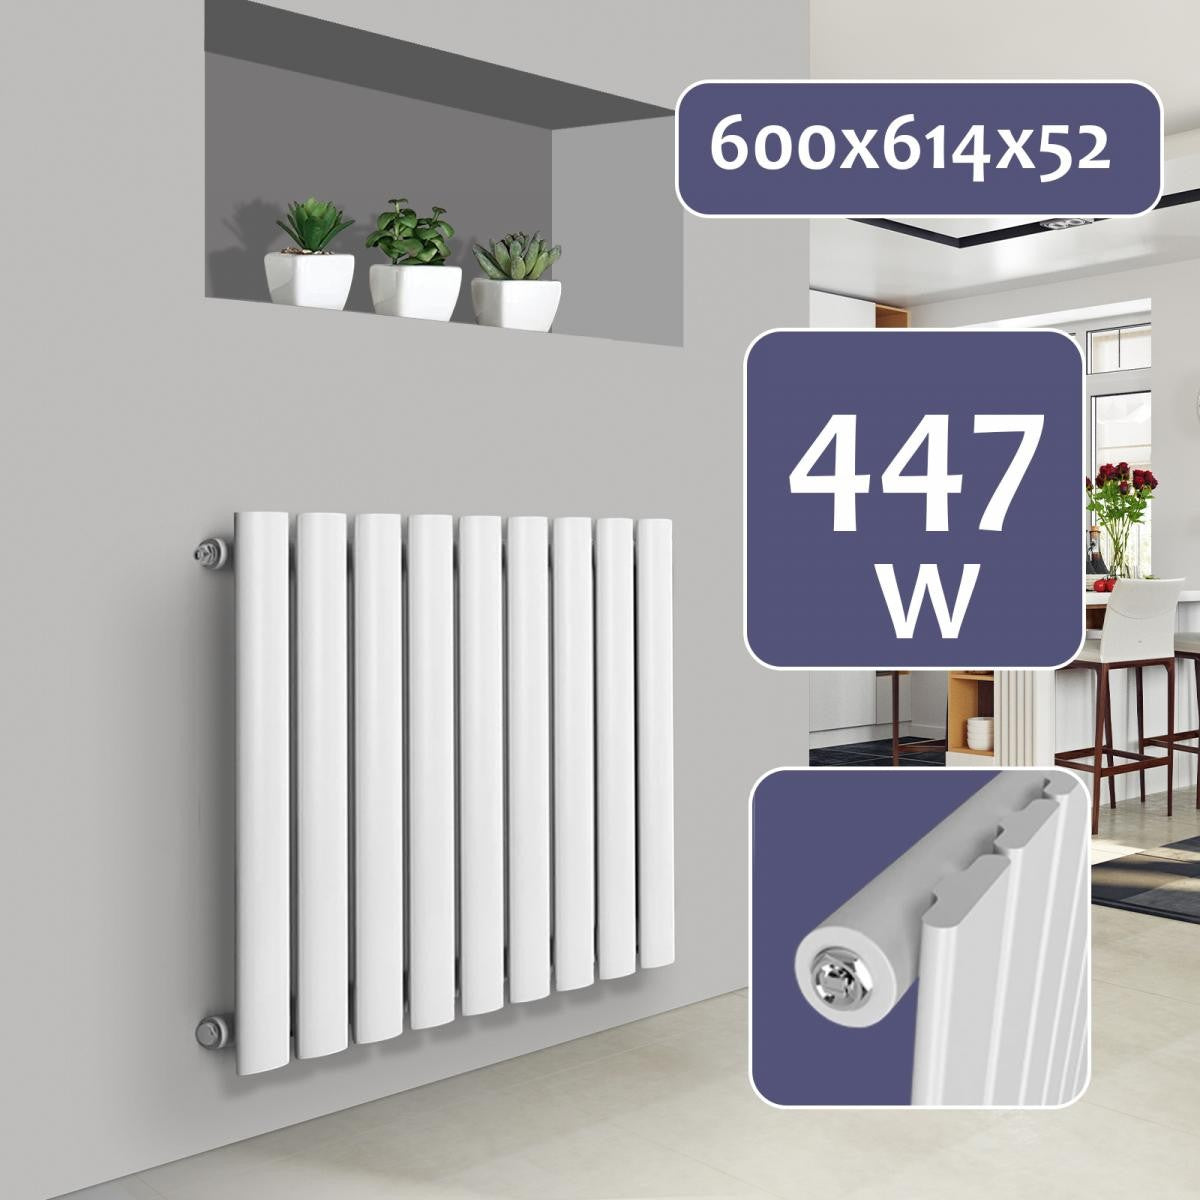 AquamarineÂ® radiator - vandret, enkeltlag, 9 segmenter, 600x614x52 mm, centralvarme, hvid